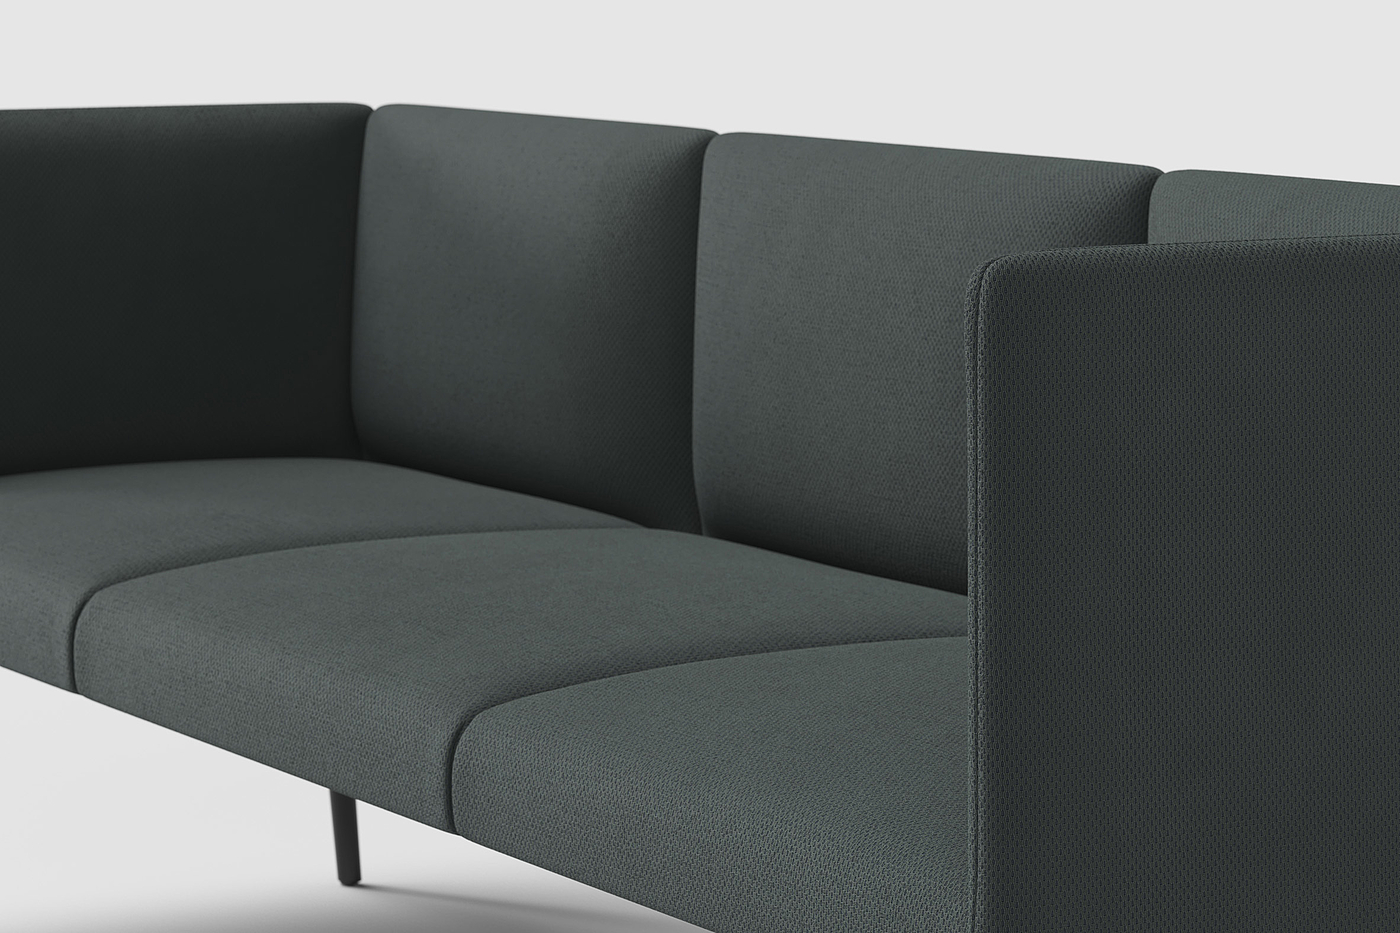 De Vorm，Mino Sofa，模块化座椅，美学设计，产品设计，简约设计，